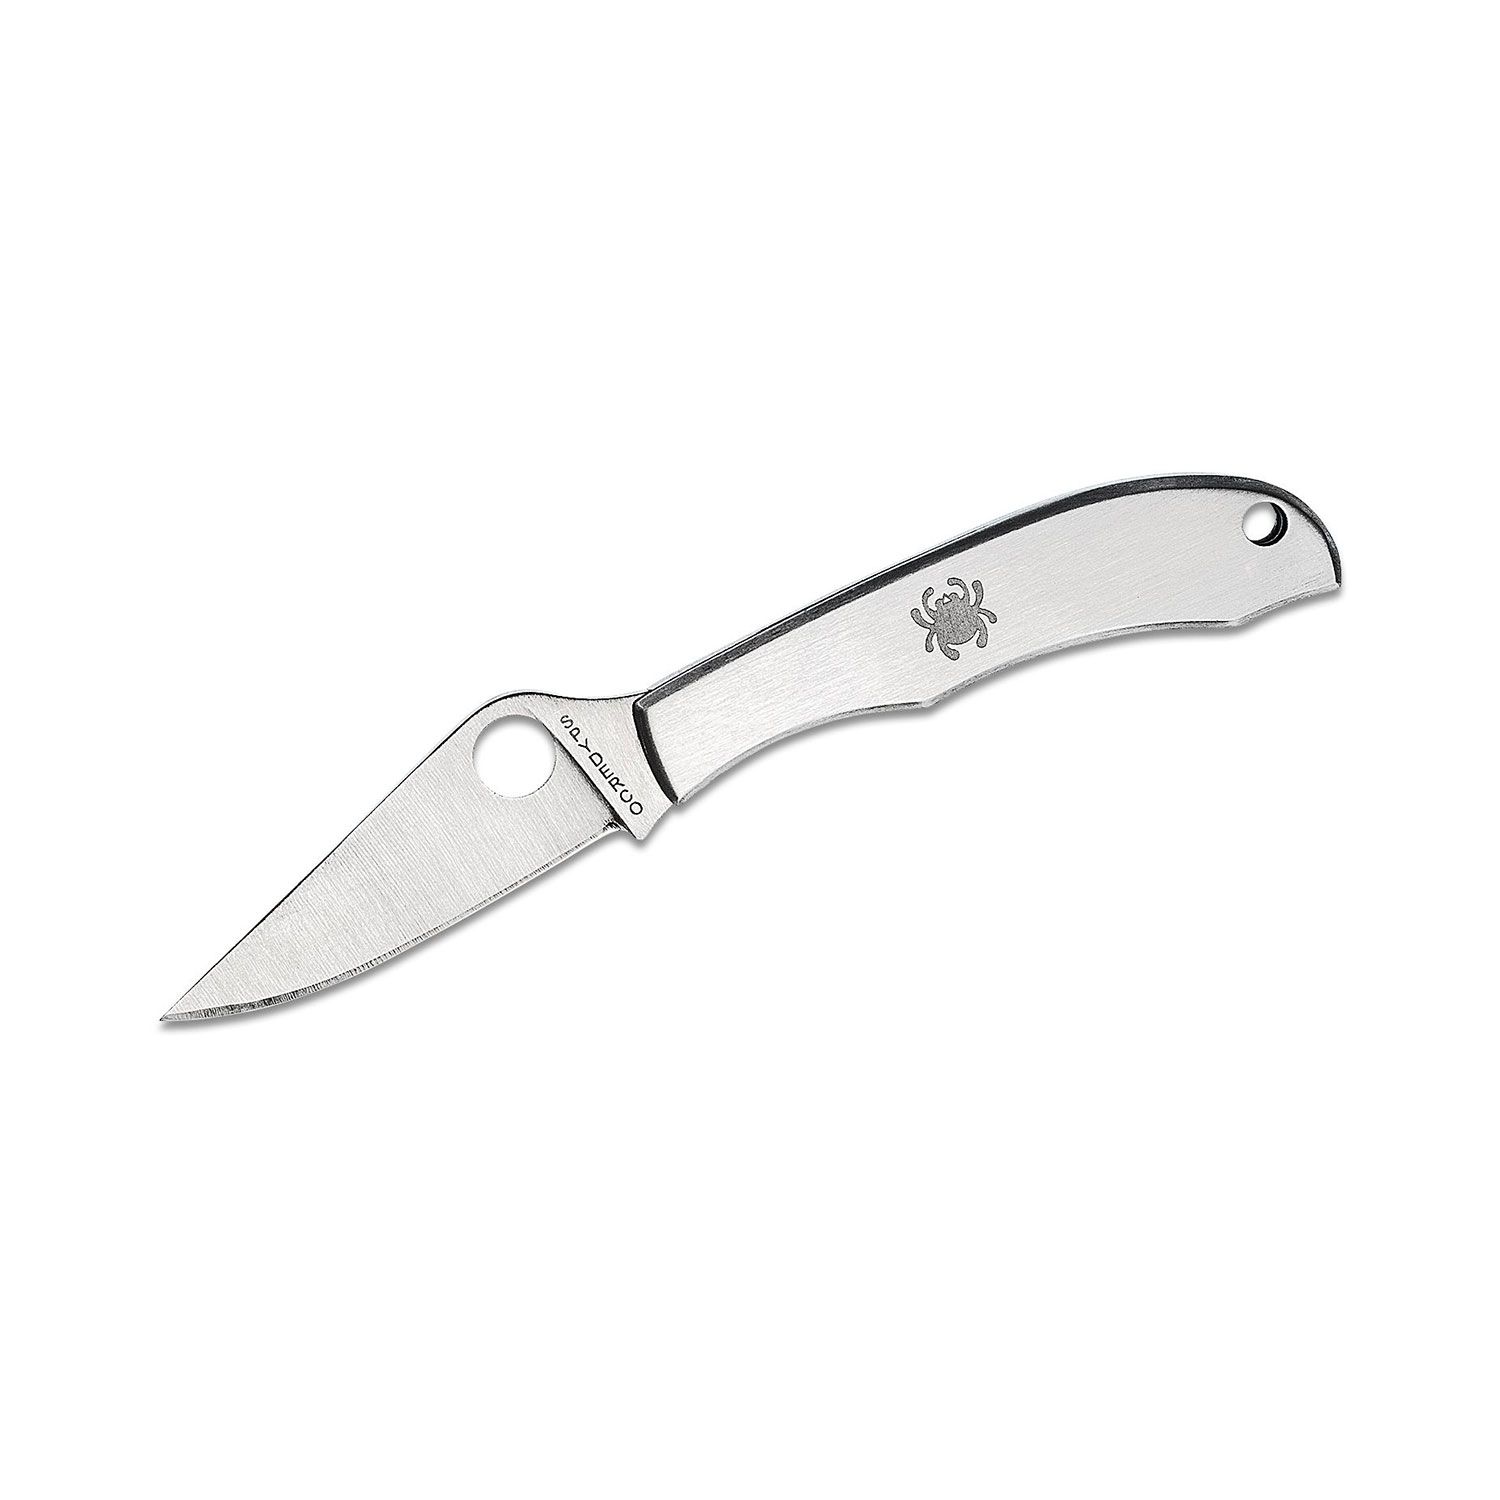 https://pics.knifecenter.com/knifecenter/spyderco-knives/images/SP137P_01.jpg